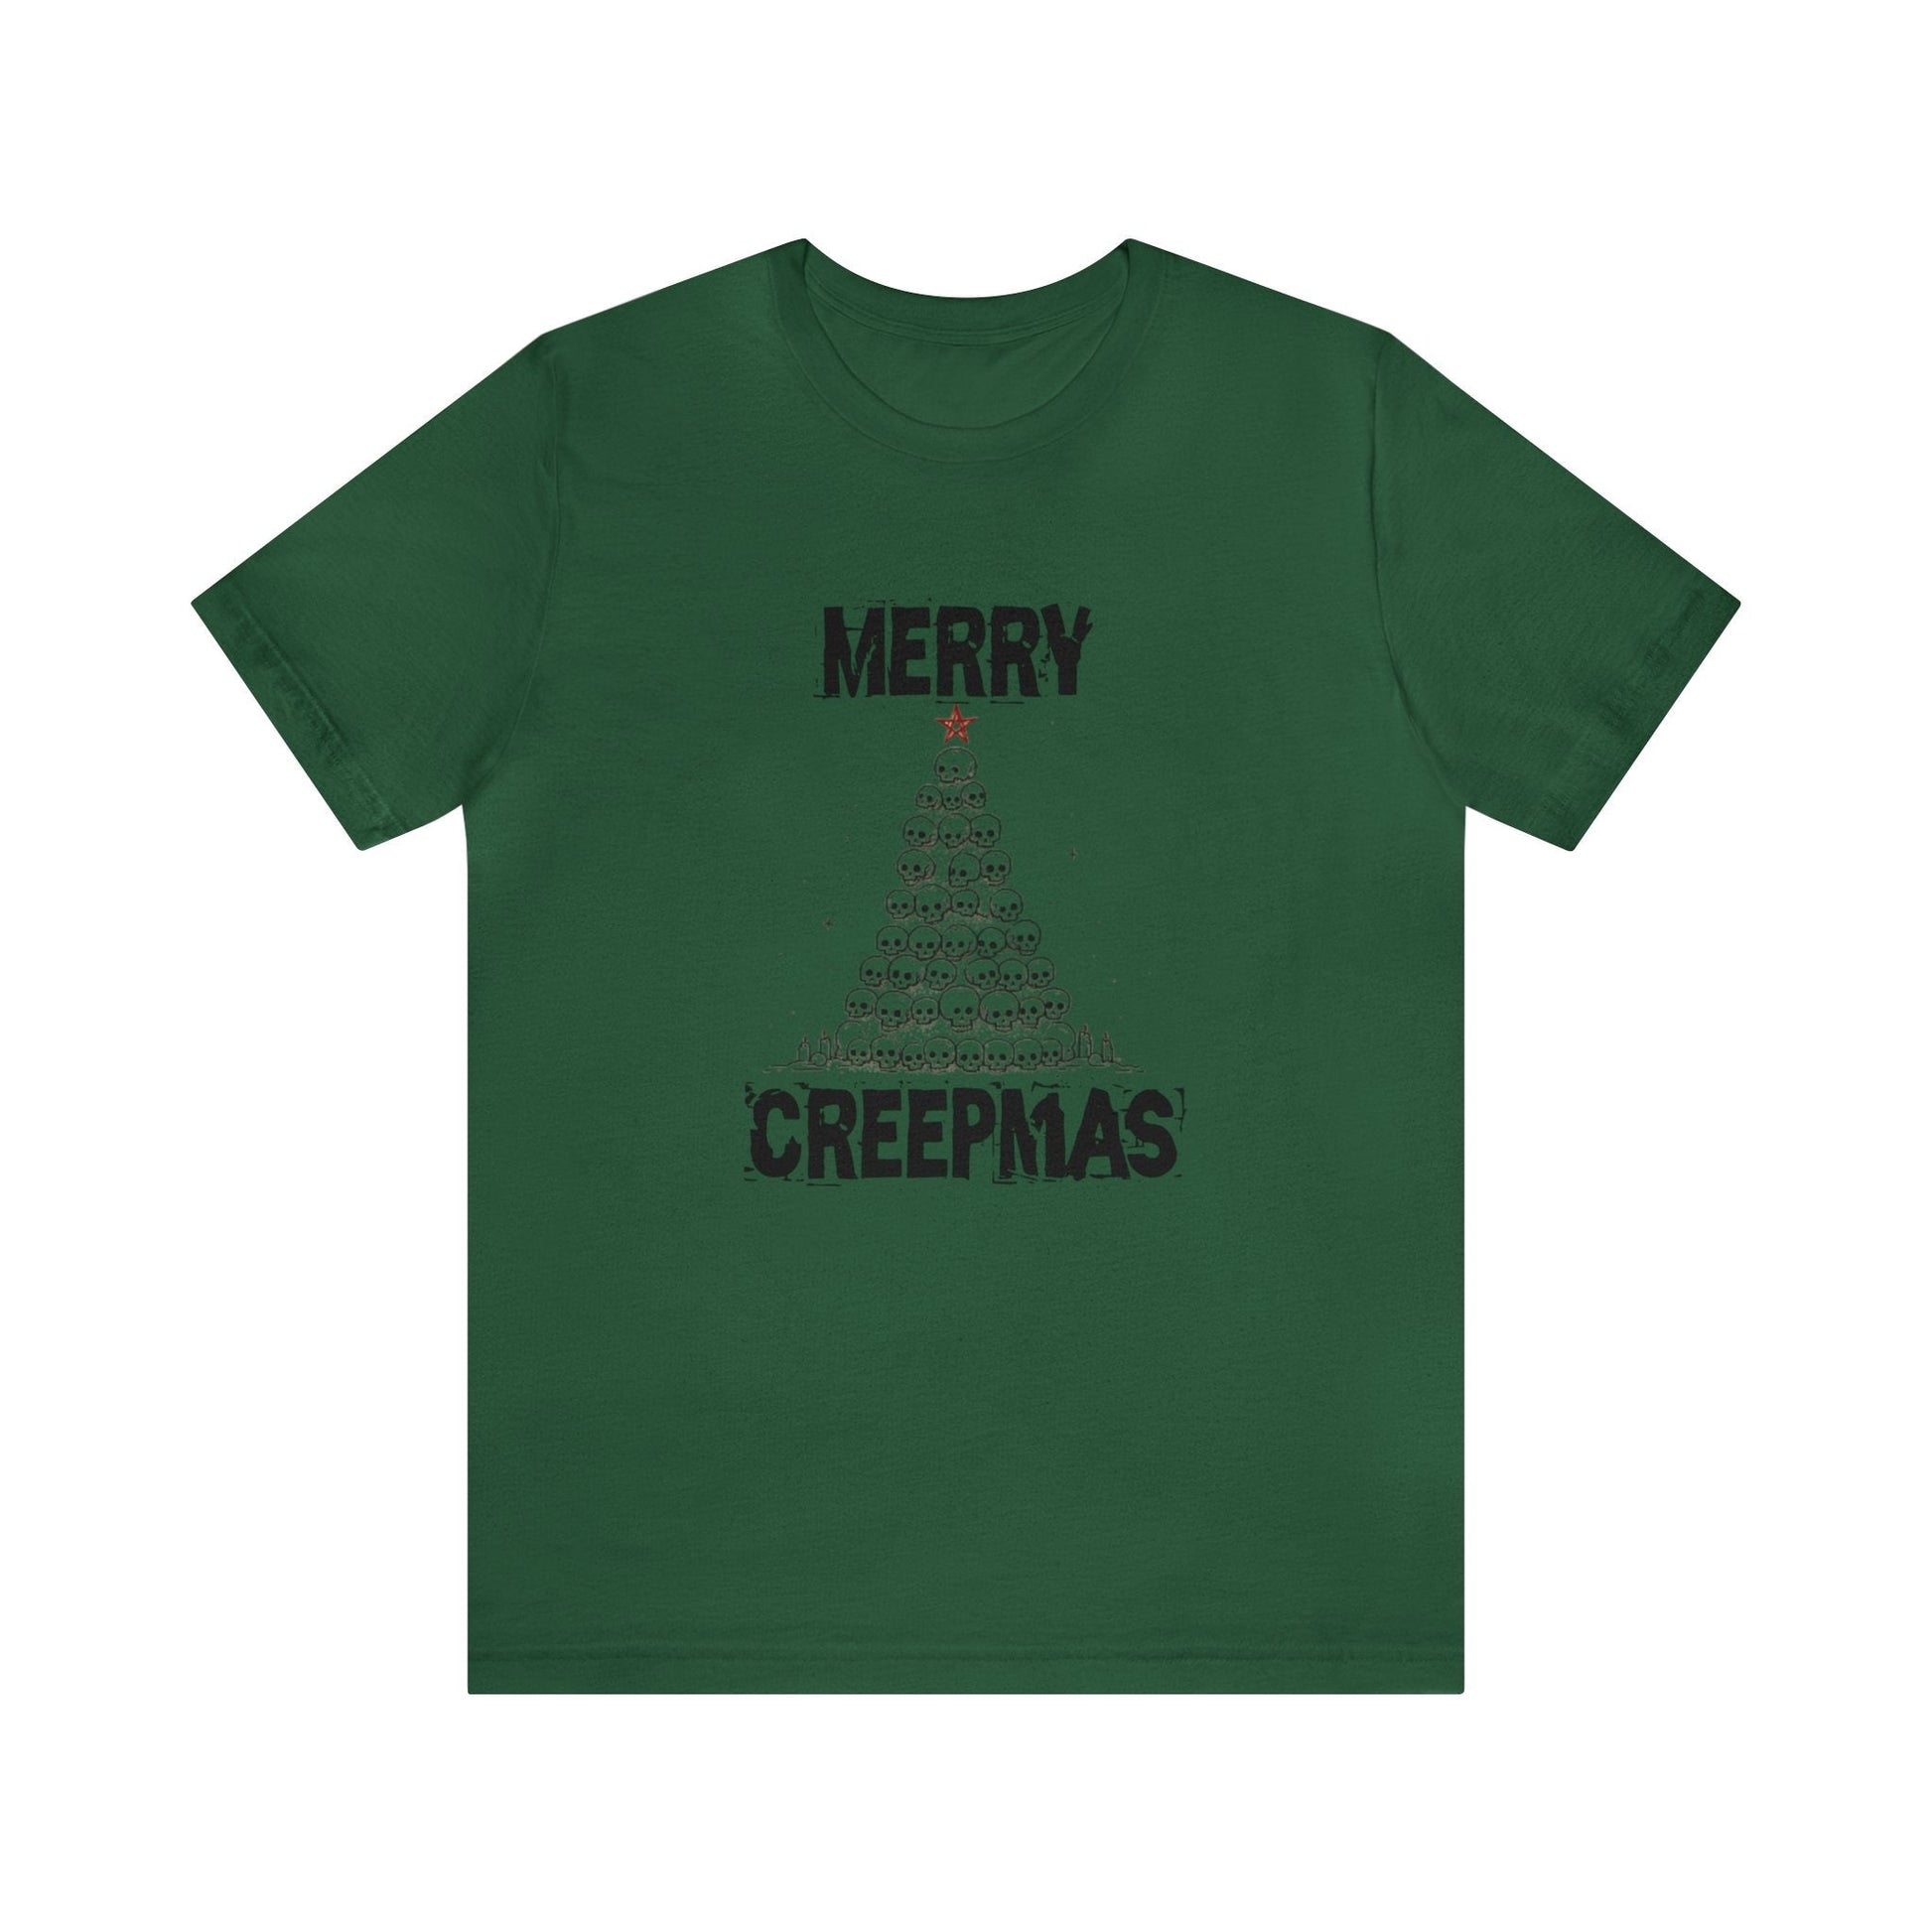 Merry Creepmas Short Sleeve Tee ShirtT - ShirtVTZdesignsEvergreenXSchristmasclothingCotton